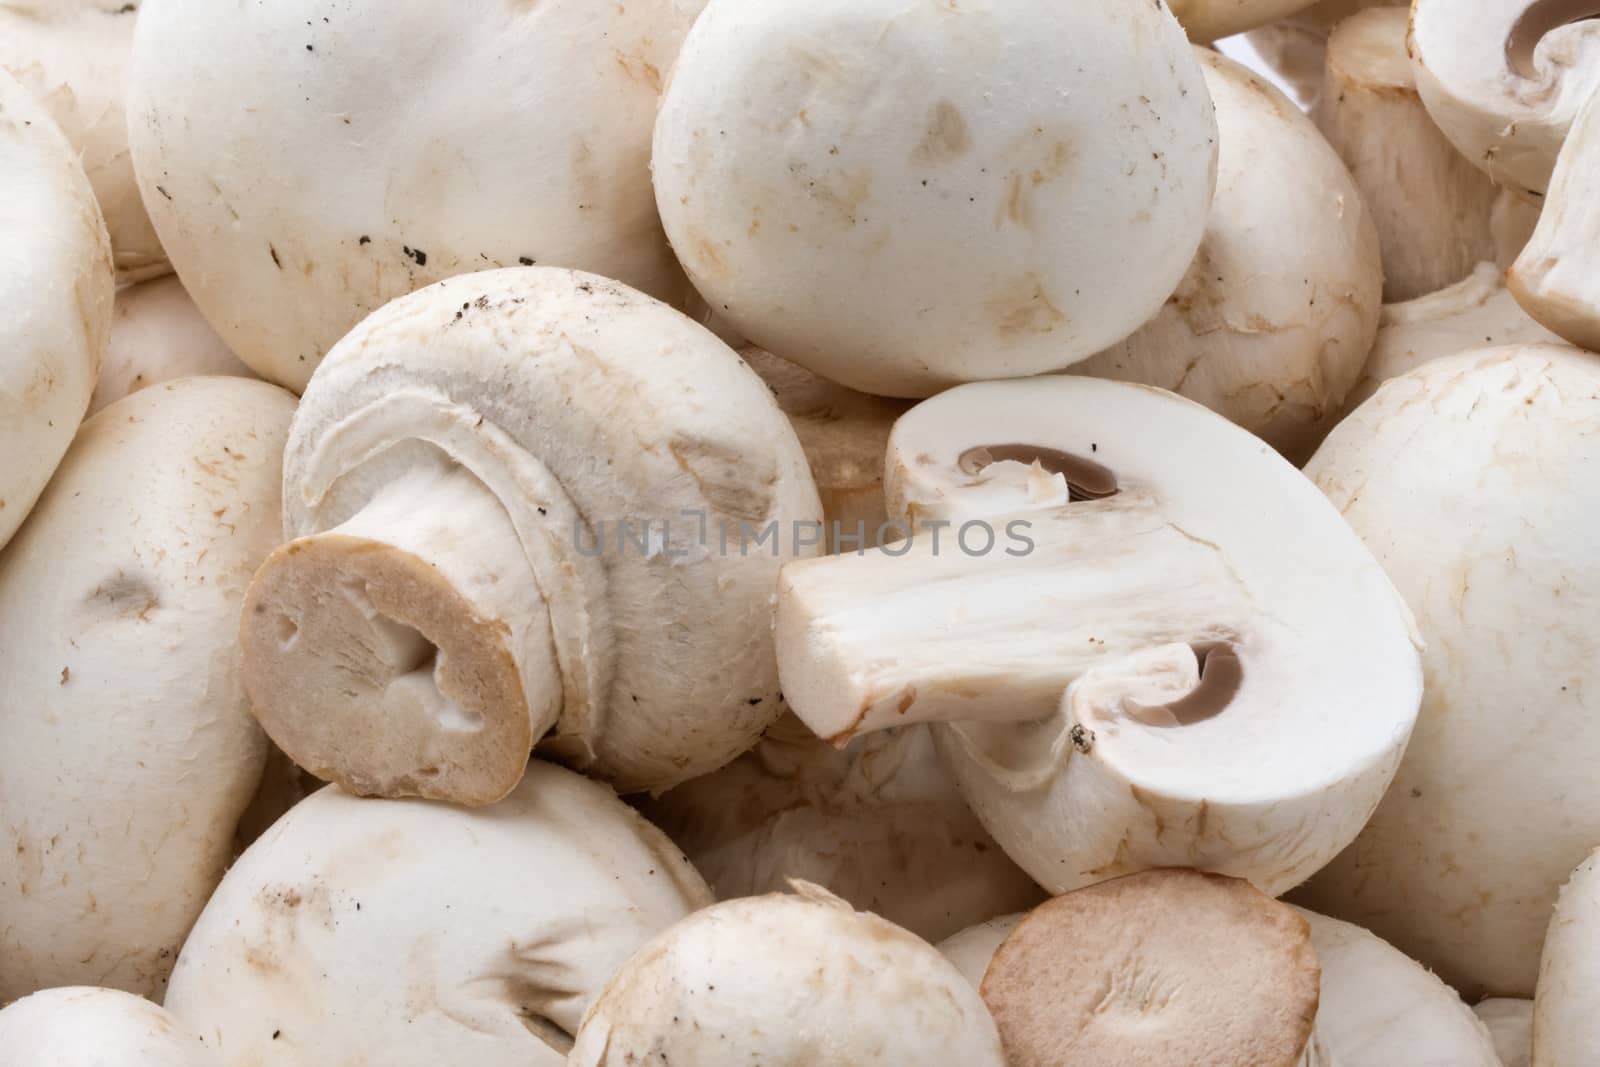 Champignon mushrooms making raw food pattern background